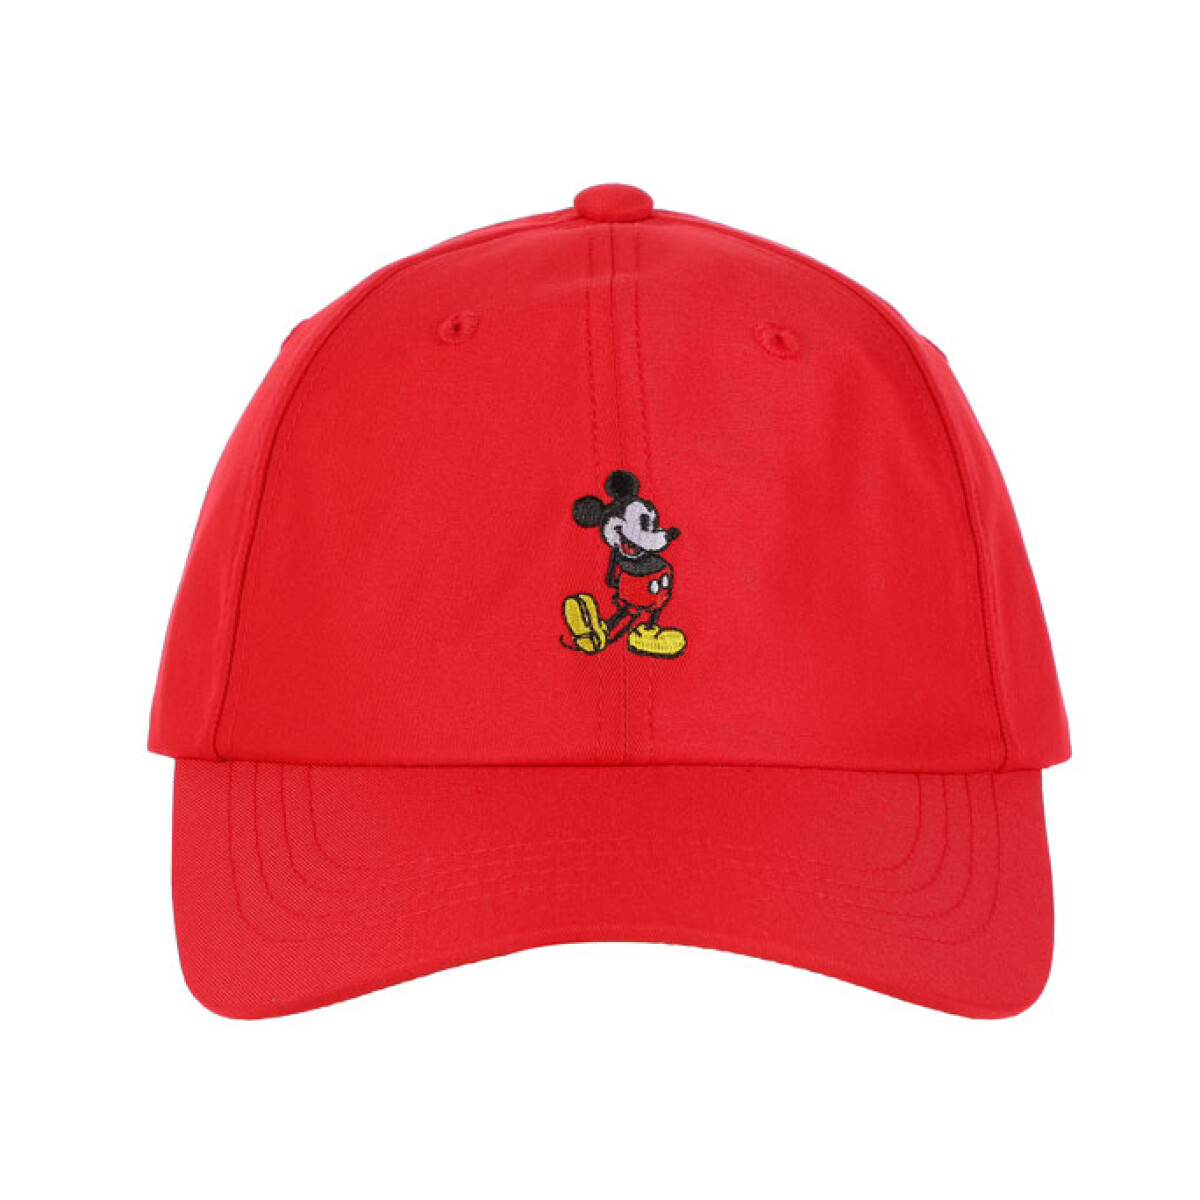 Gorro de sol bordado Mickey Mouse - Rojo 